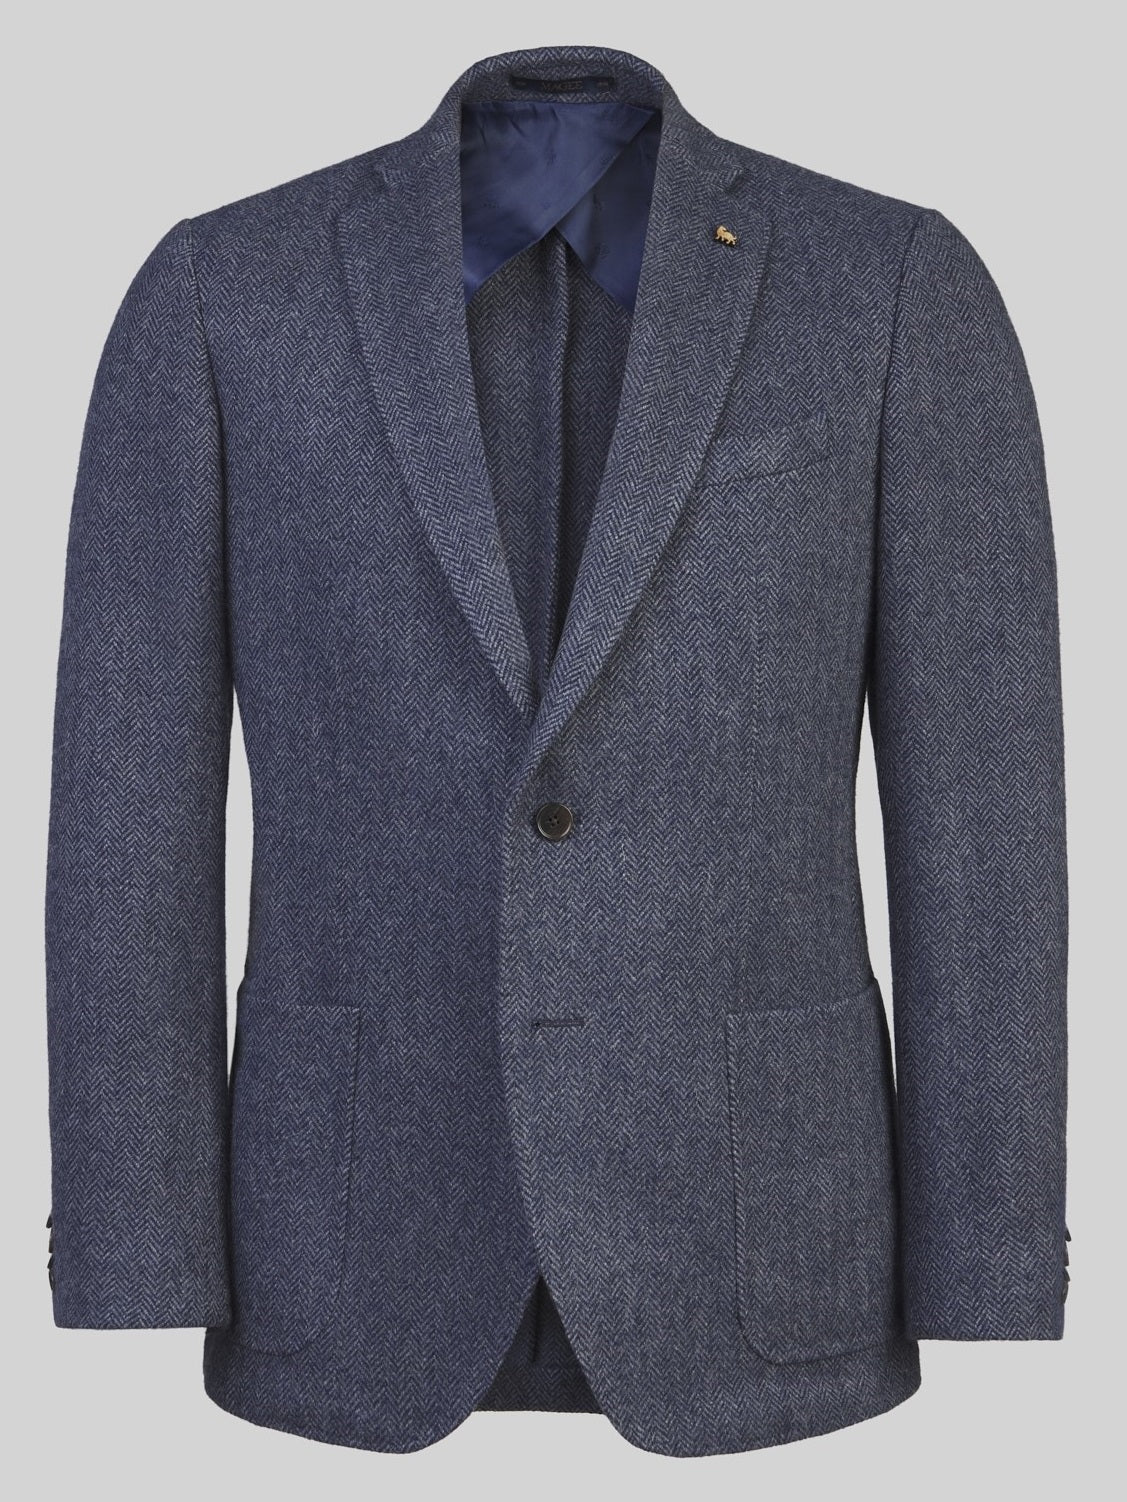 40% OFF - MAGEE Donegal Tweed Blazer - Mens Easky Patch Pocket - Blue & Grey Herringbone - Size: 44 REG